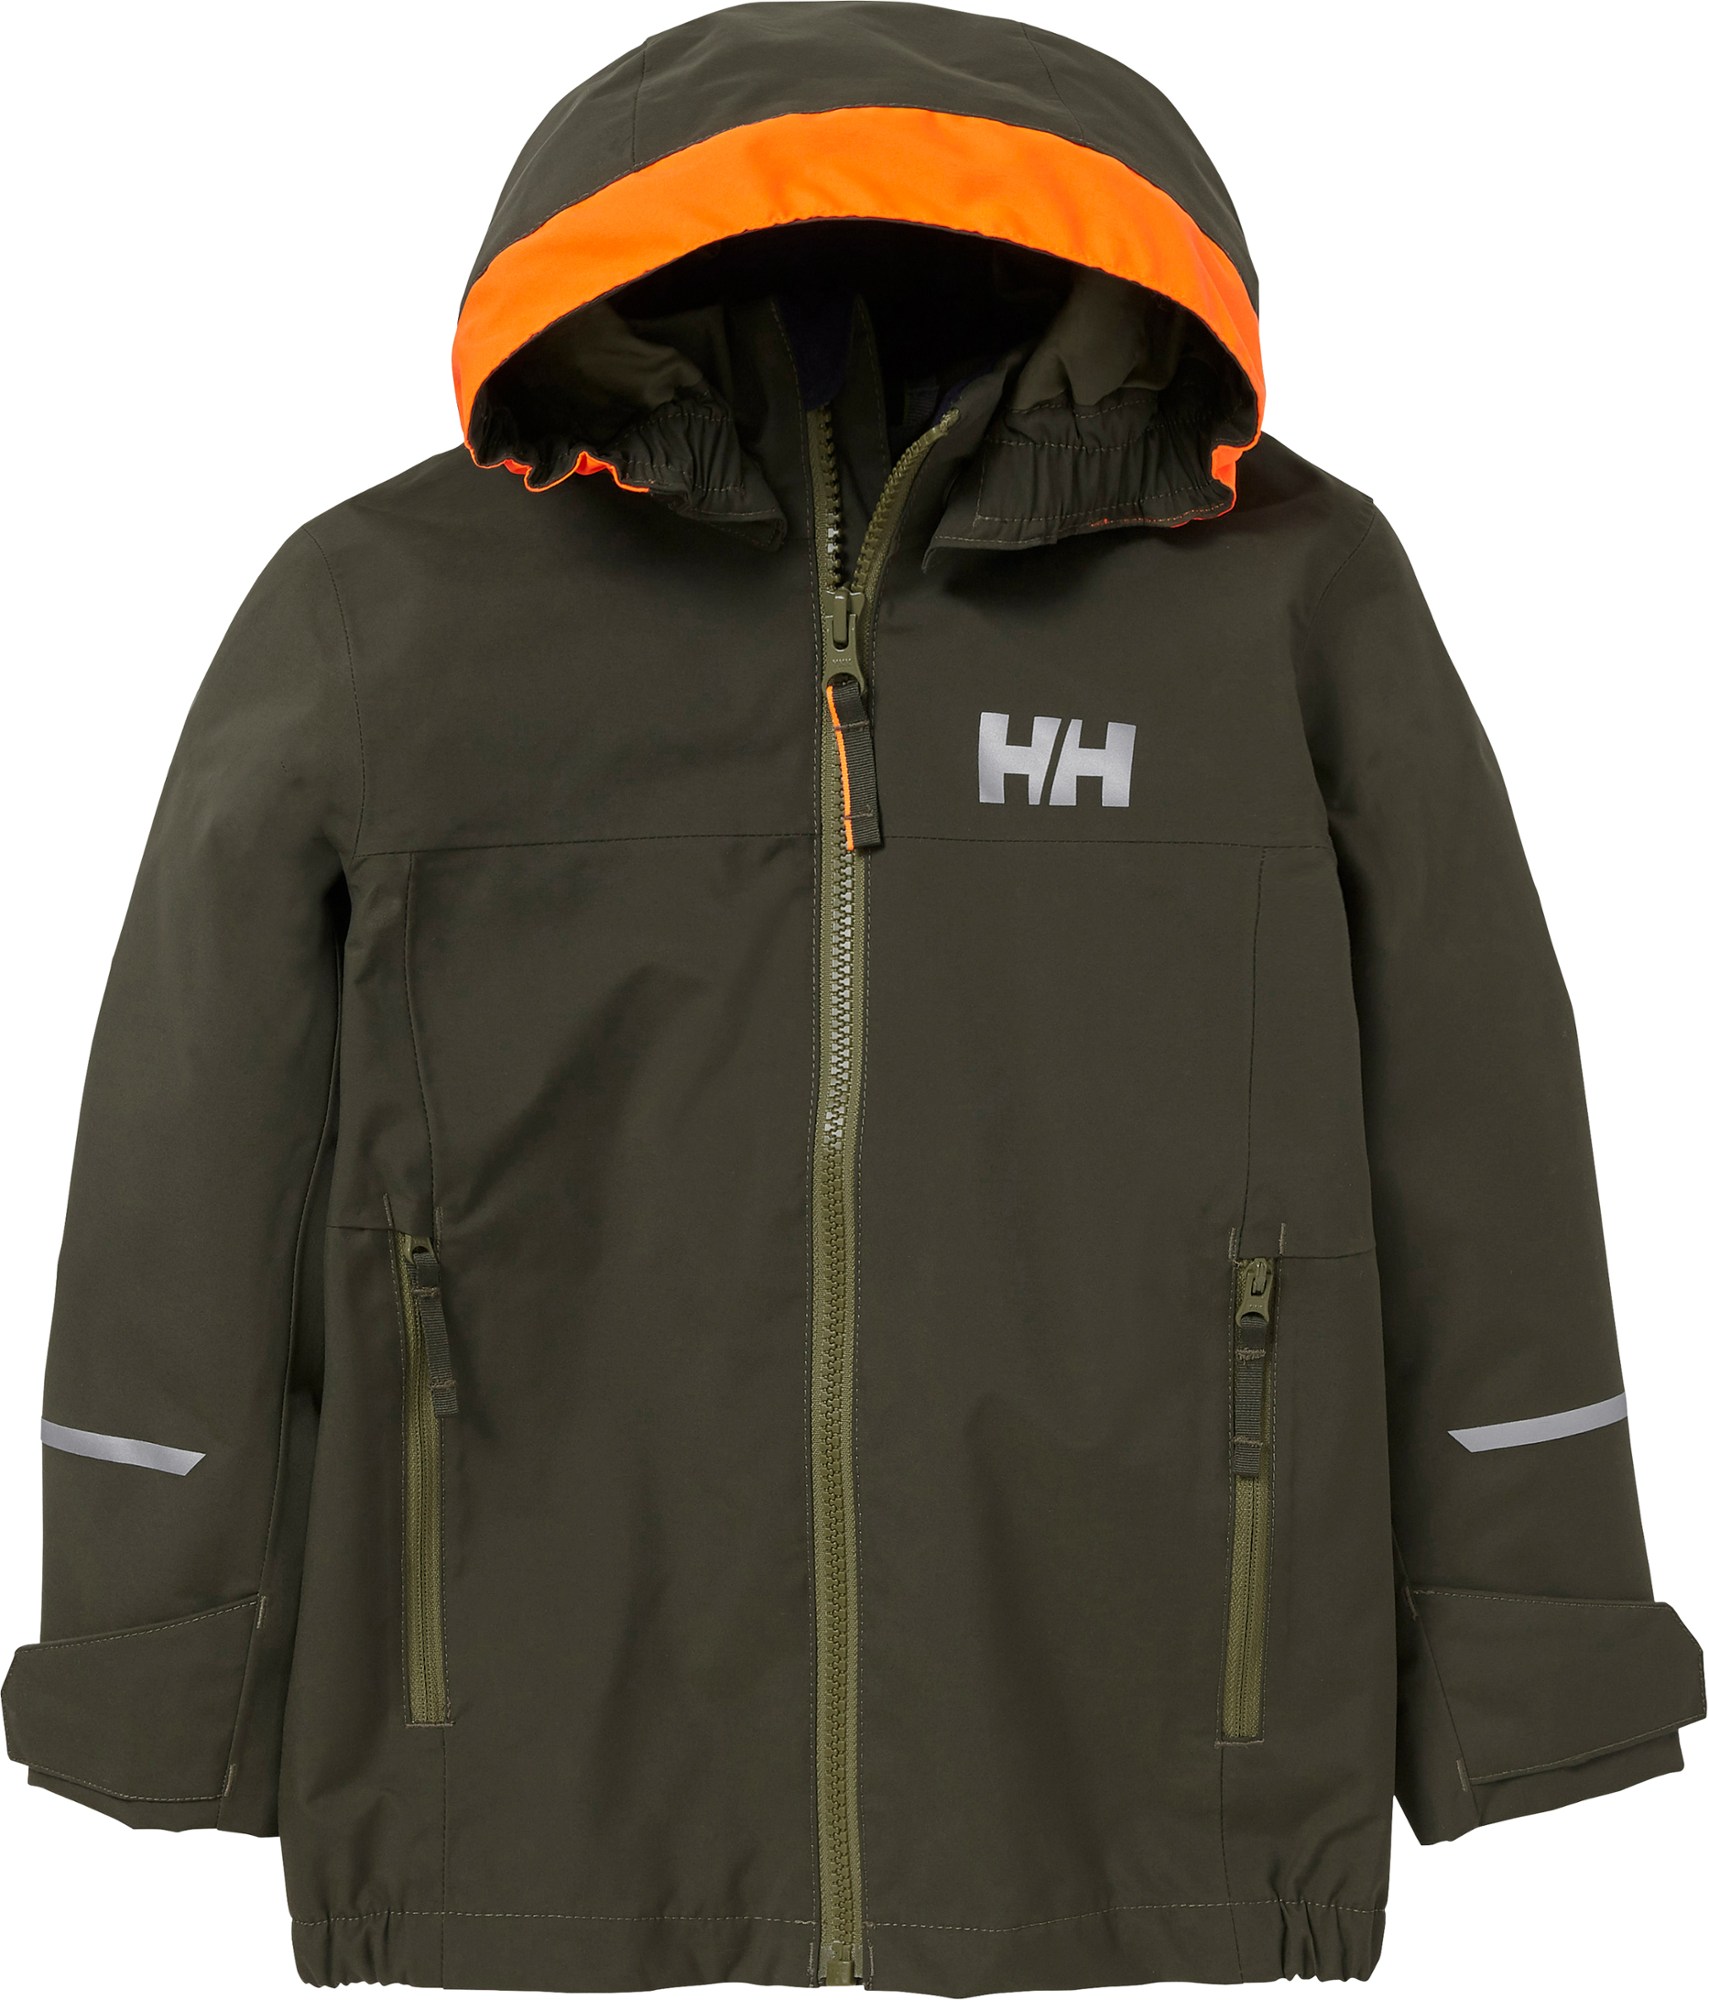 Куртка защитная 2.0 – детская Helly Hansen, зеленый